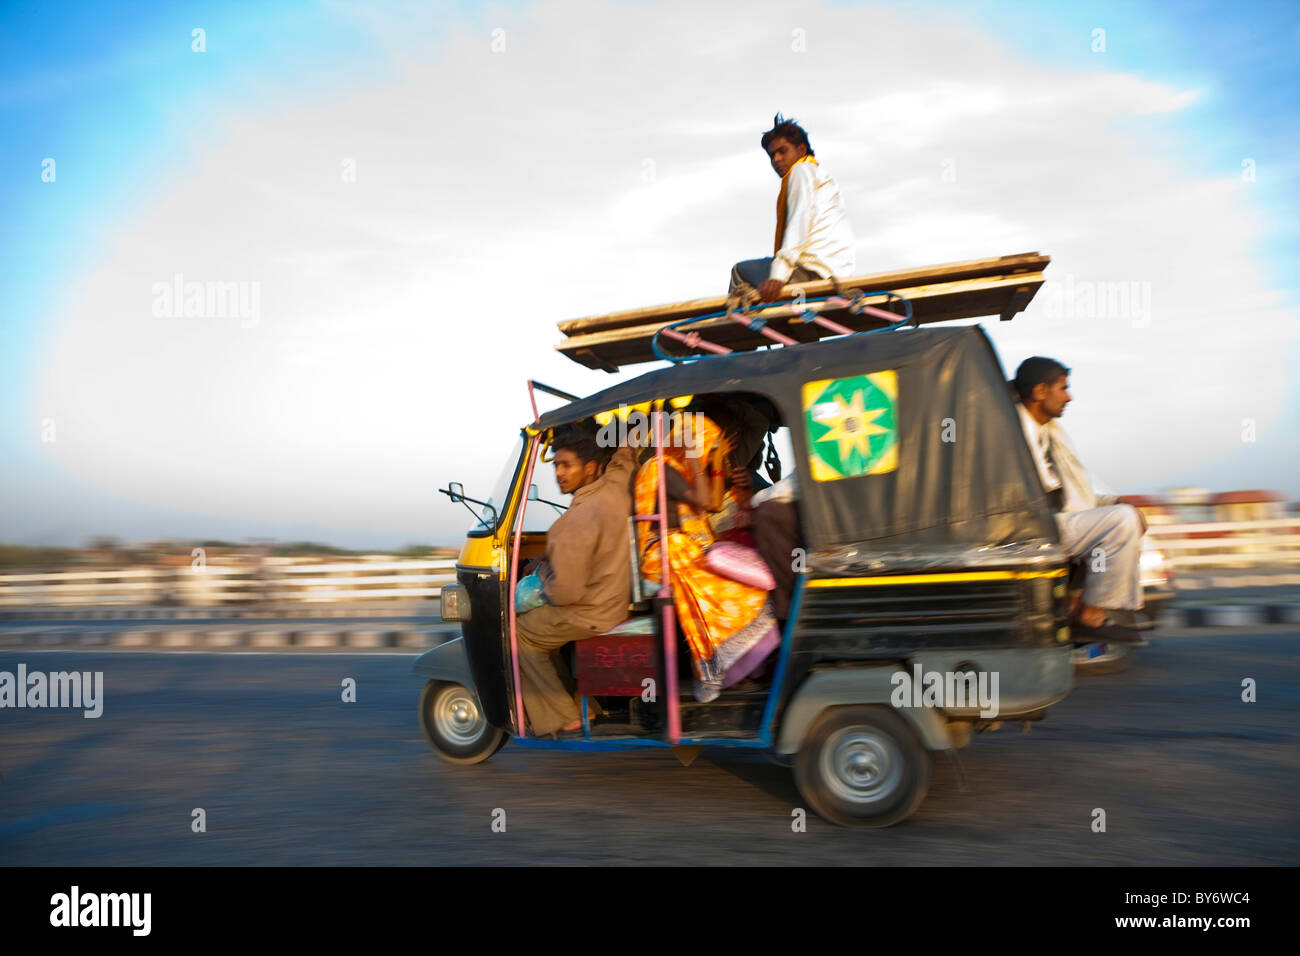 Auto-rickshaw, Uttar Pradesh, Inde Banque D'Images